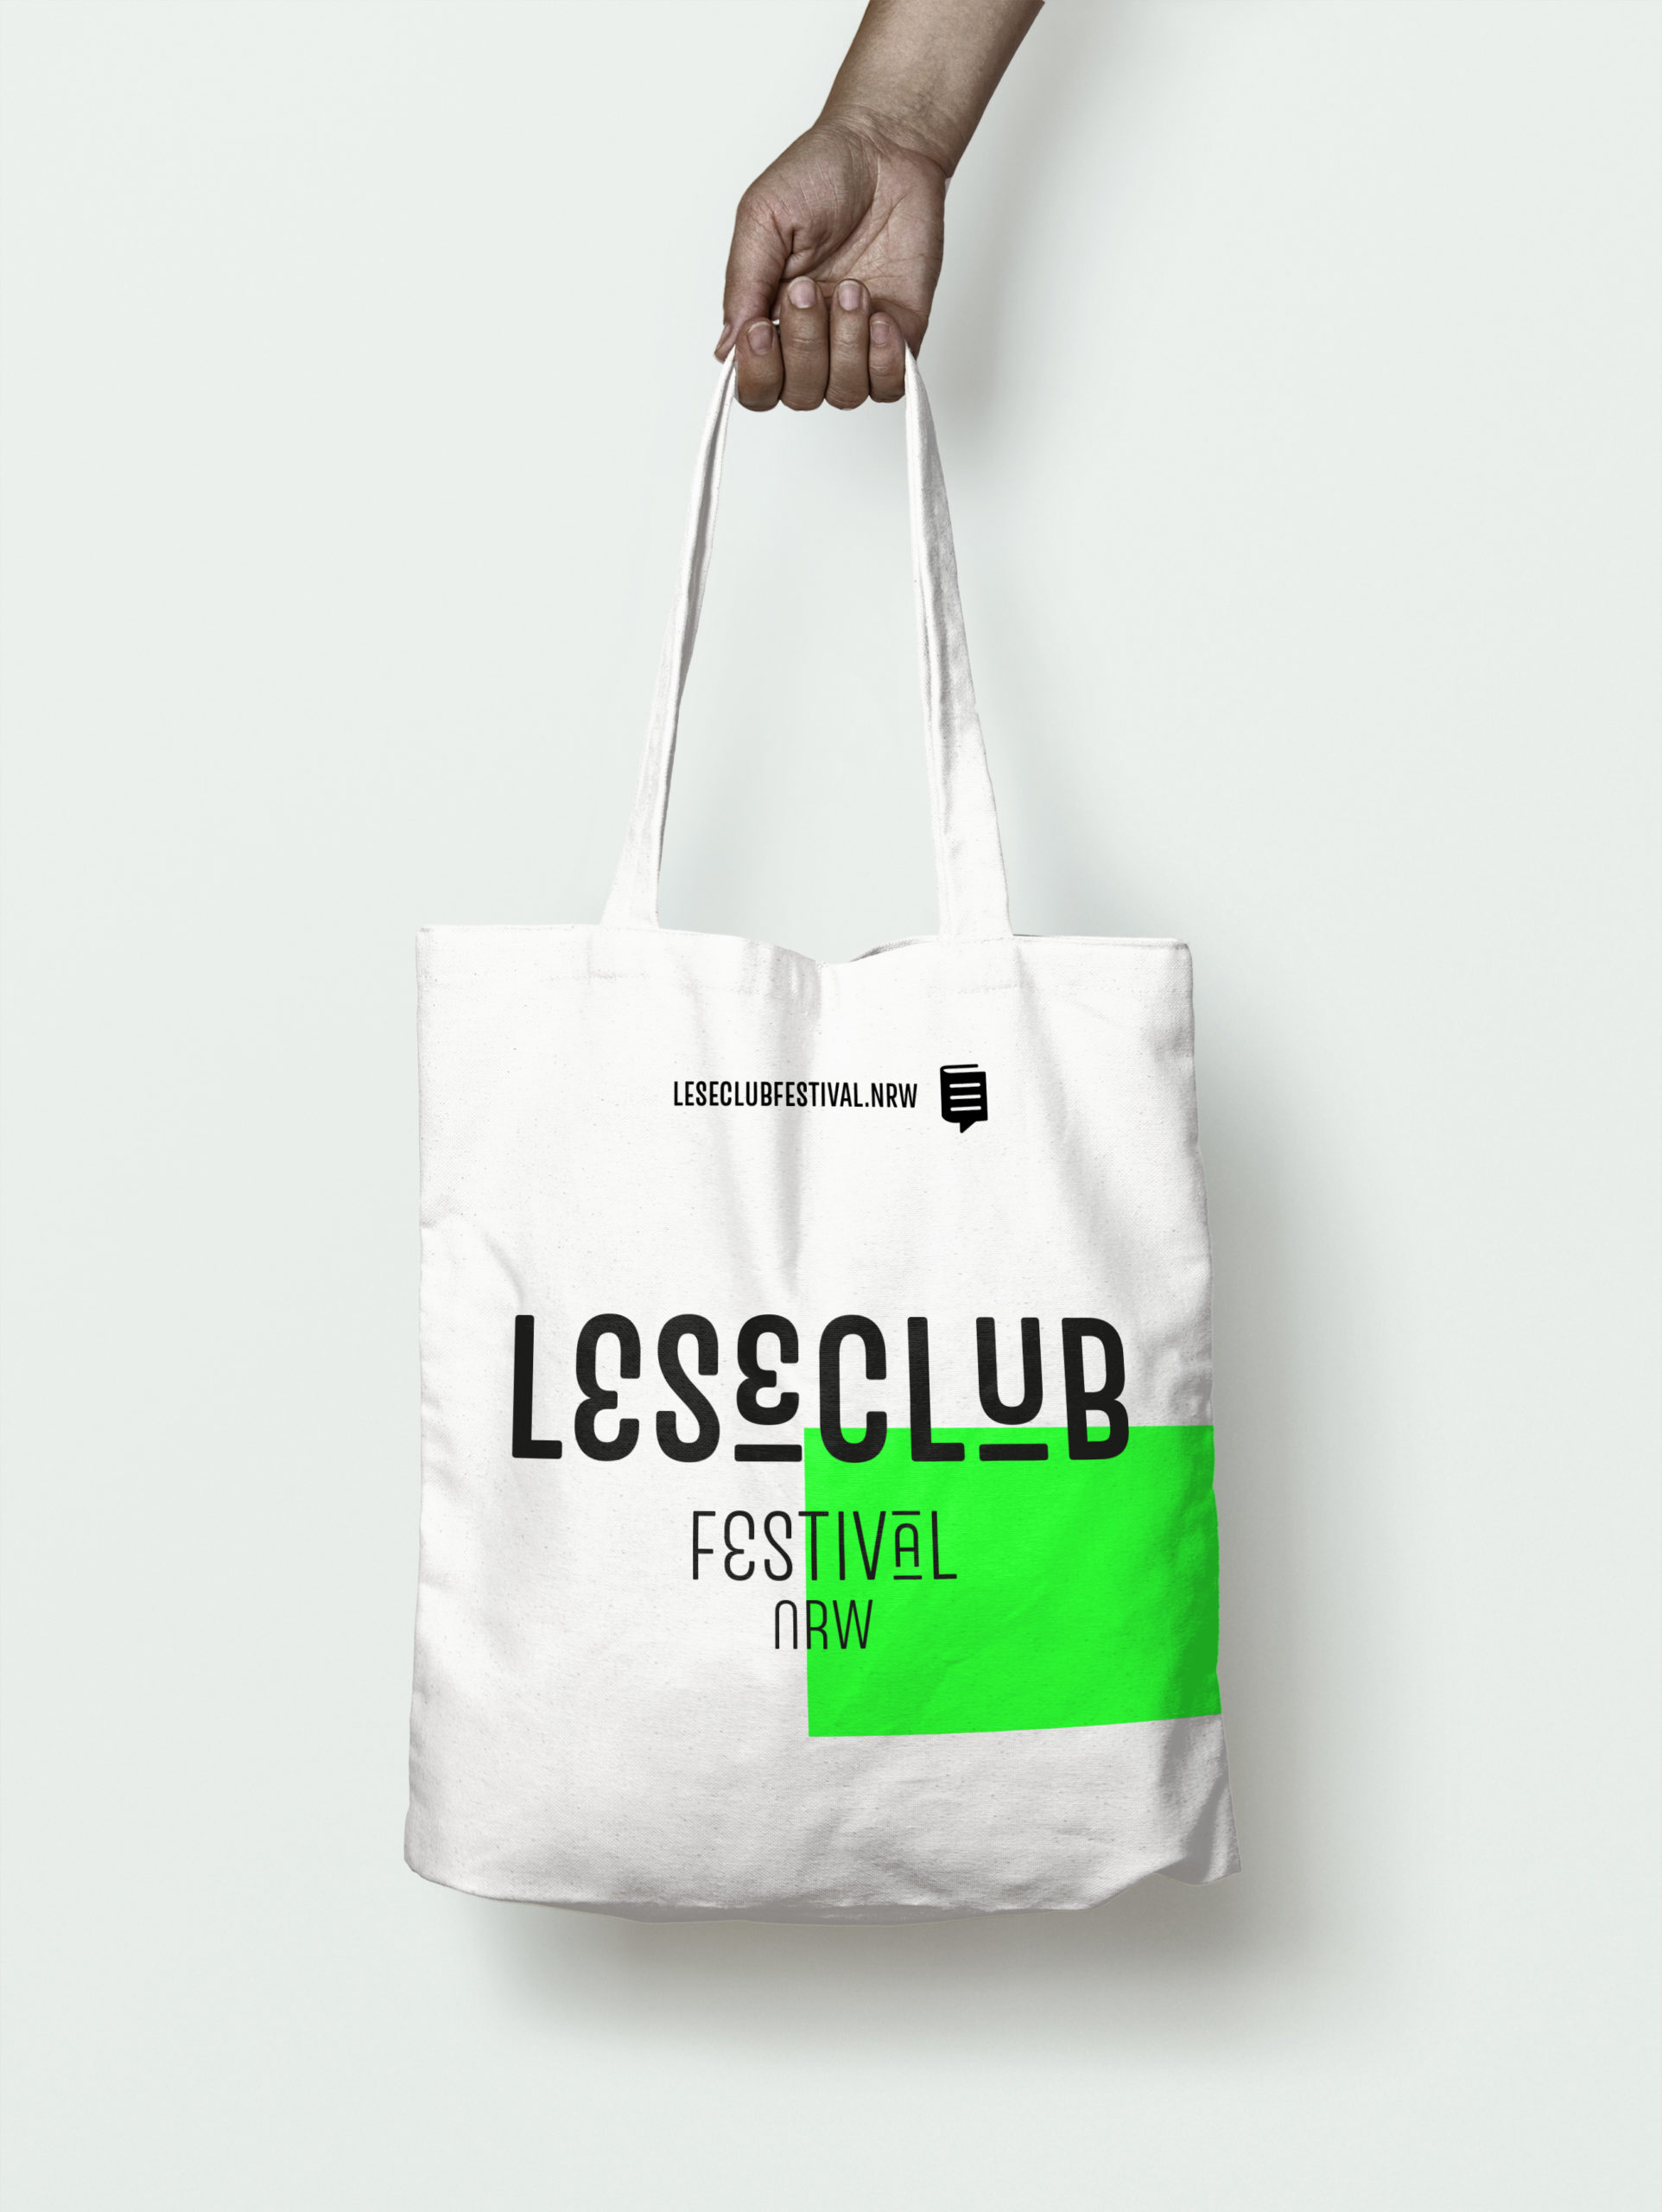 Leseclub_Festival_Anwendung_bag